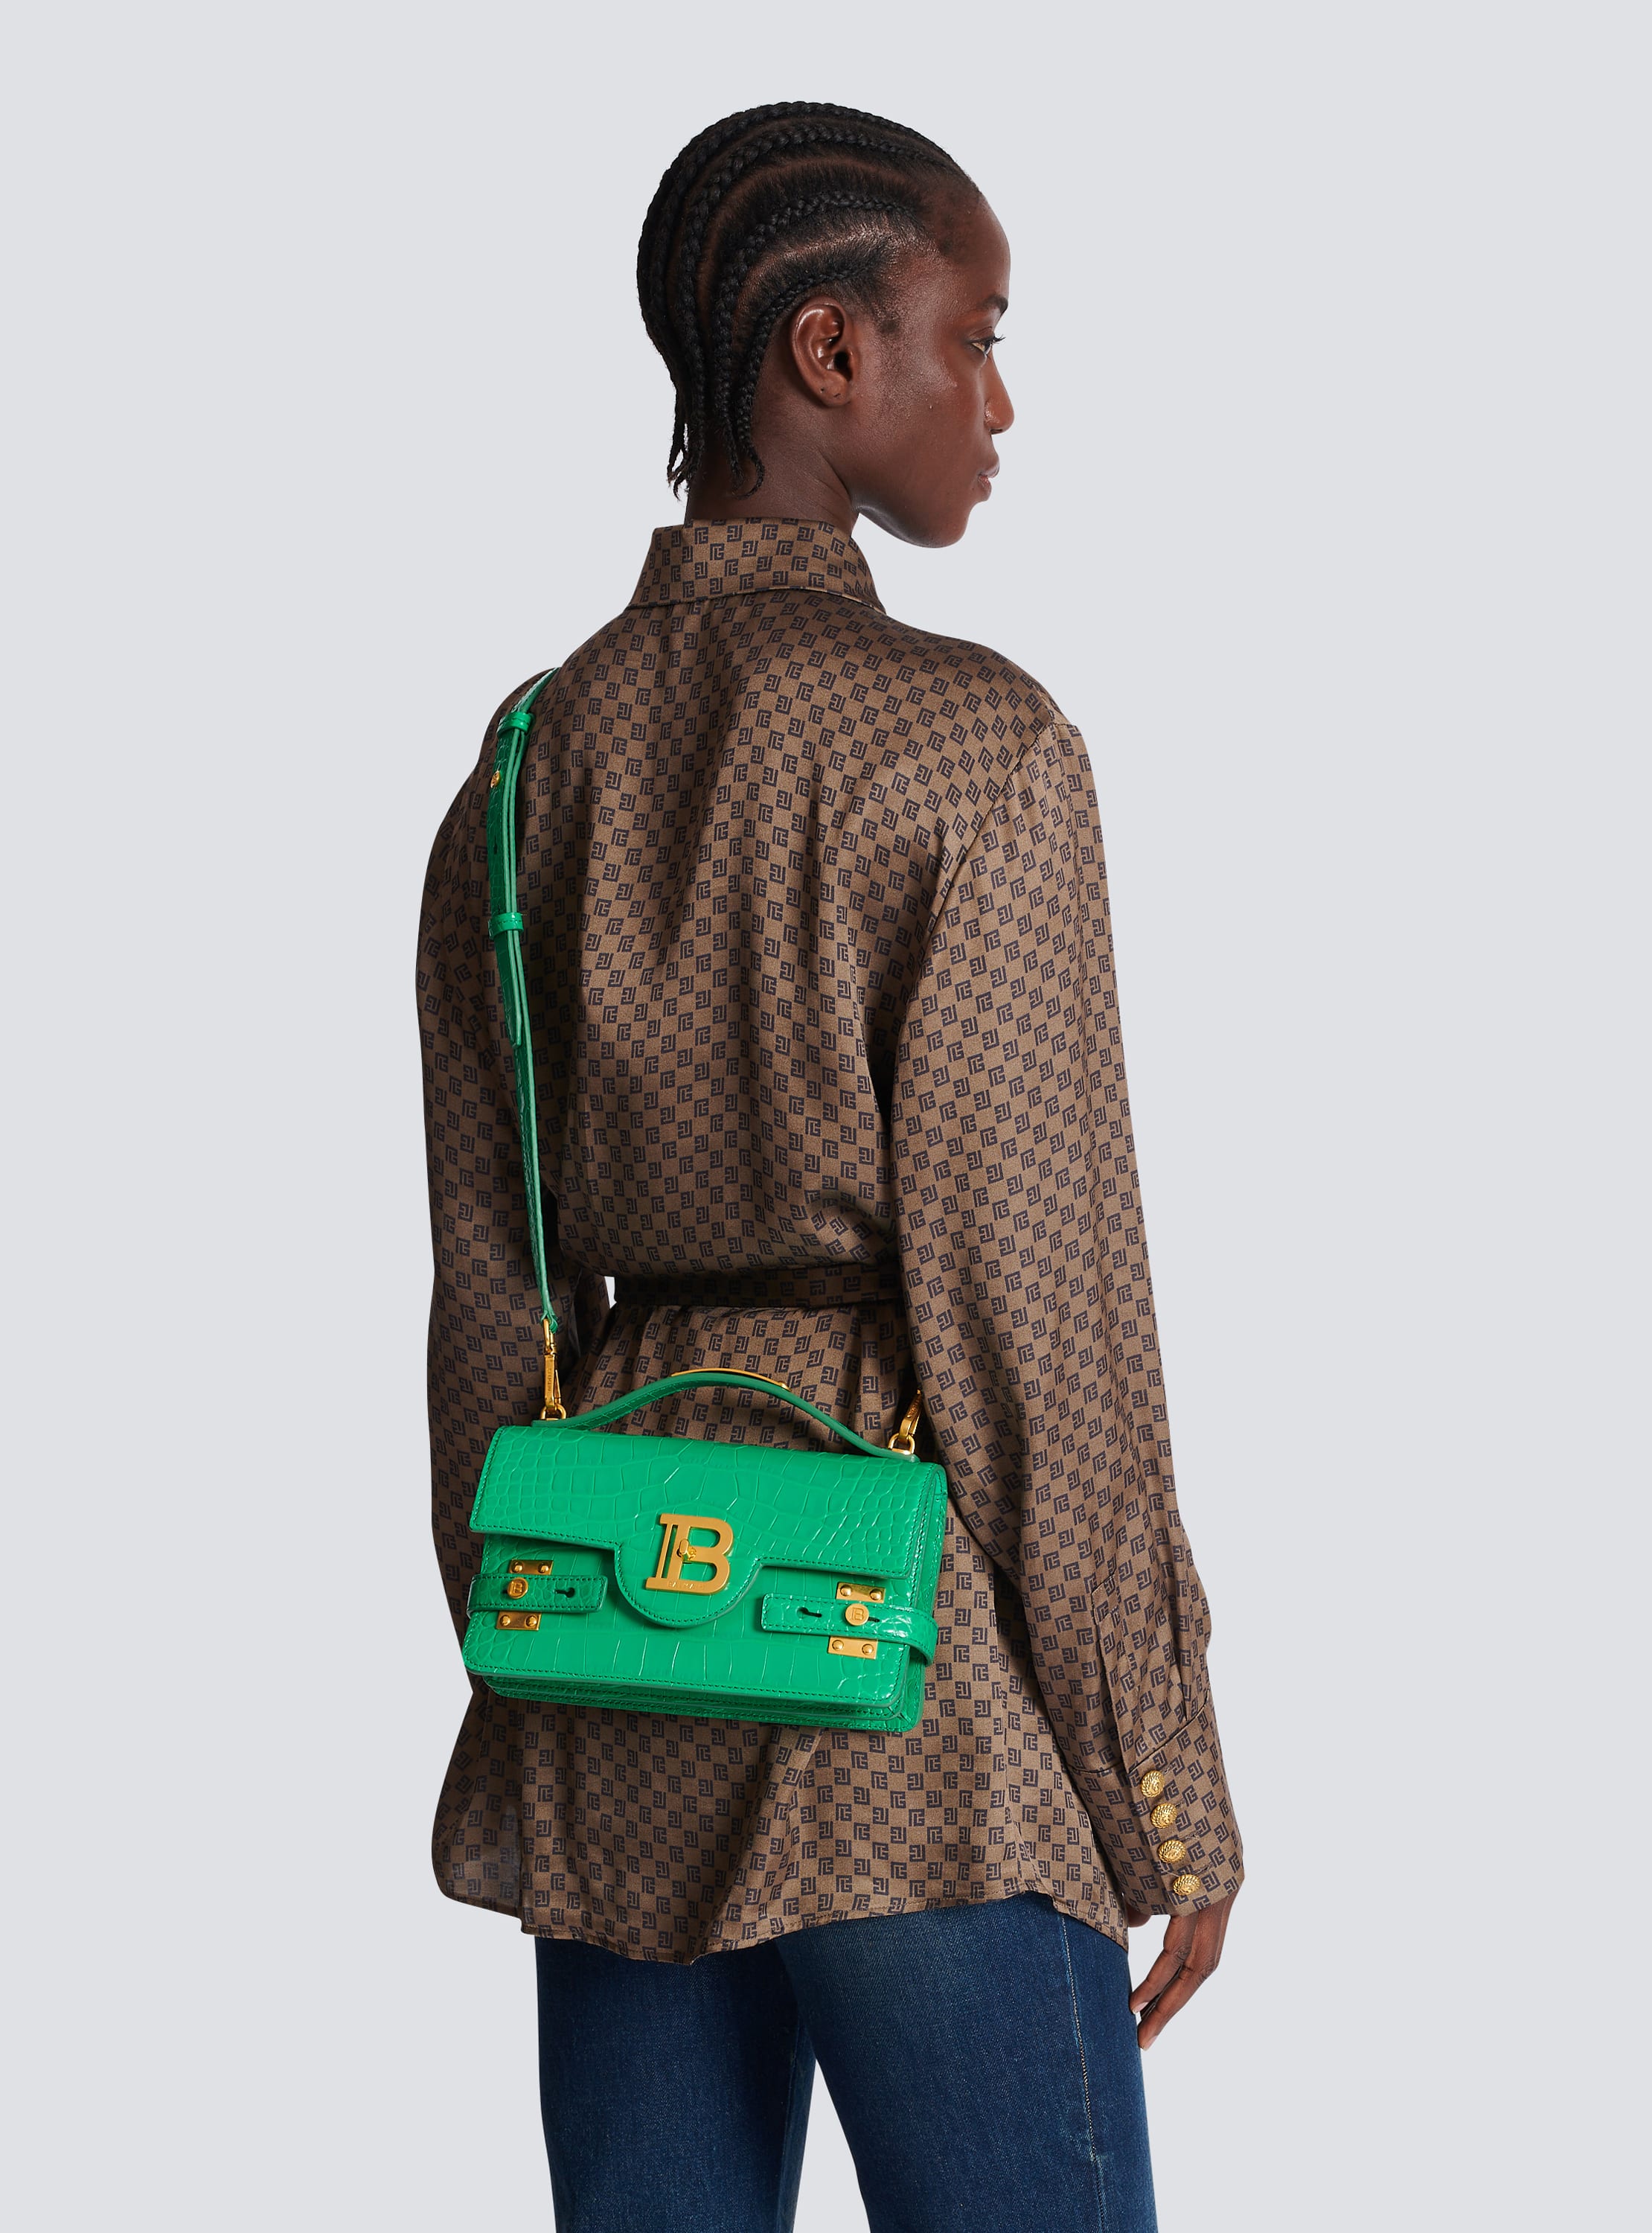 BALMAIN: B-Buzz 24 bag in crocodile-print leather - Green